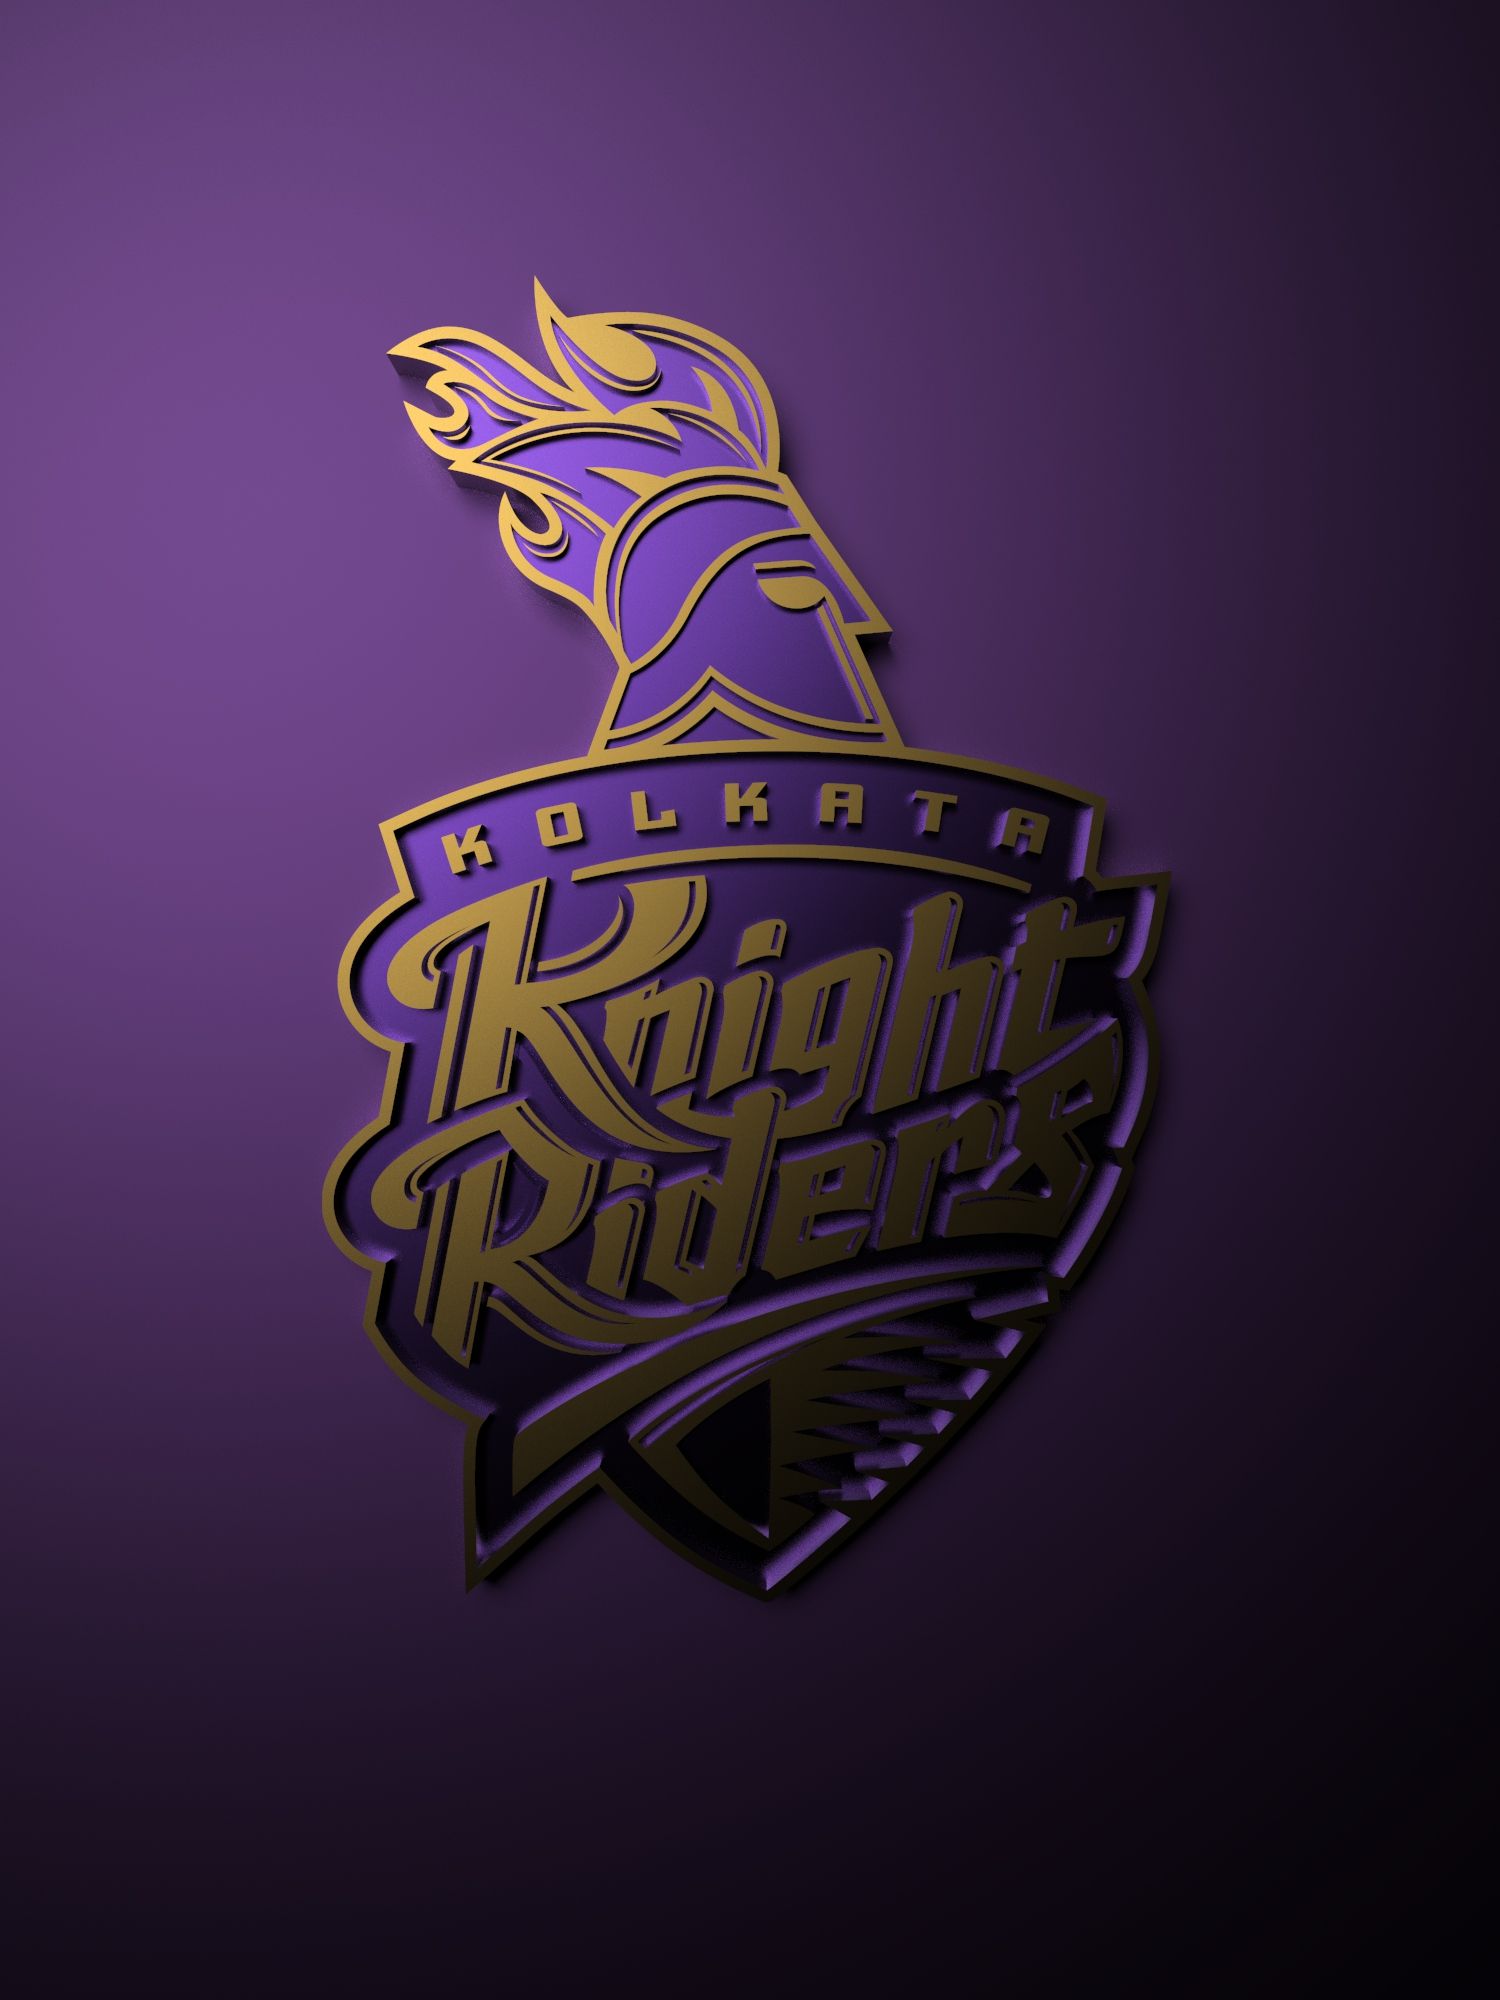 Kolkata Knight Riders IPL metallic logo poster painting. Kolkata knight riders, Knight rider, Metallic logo